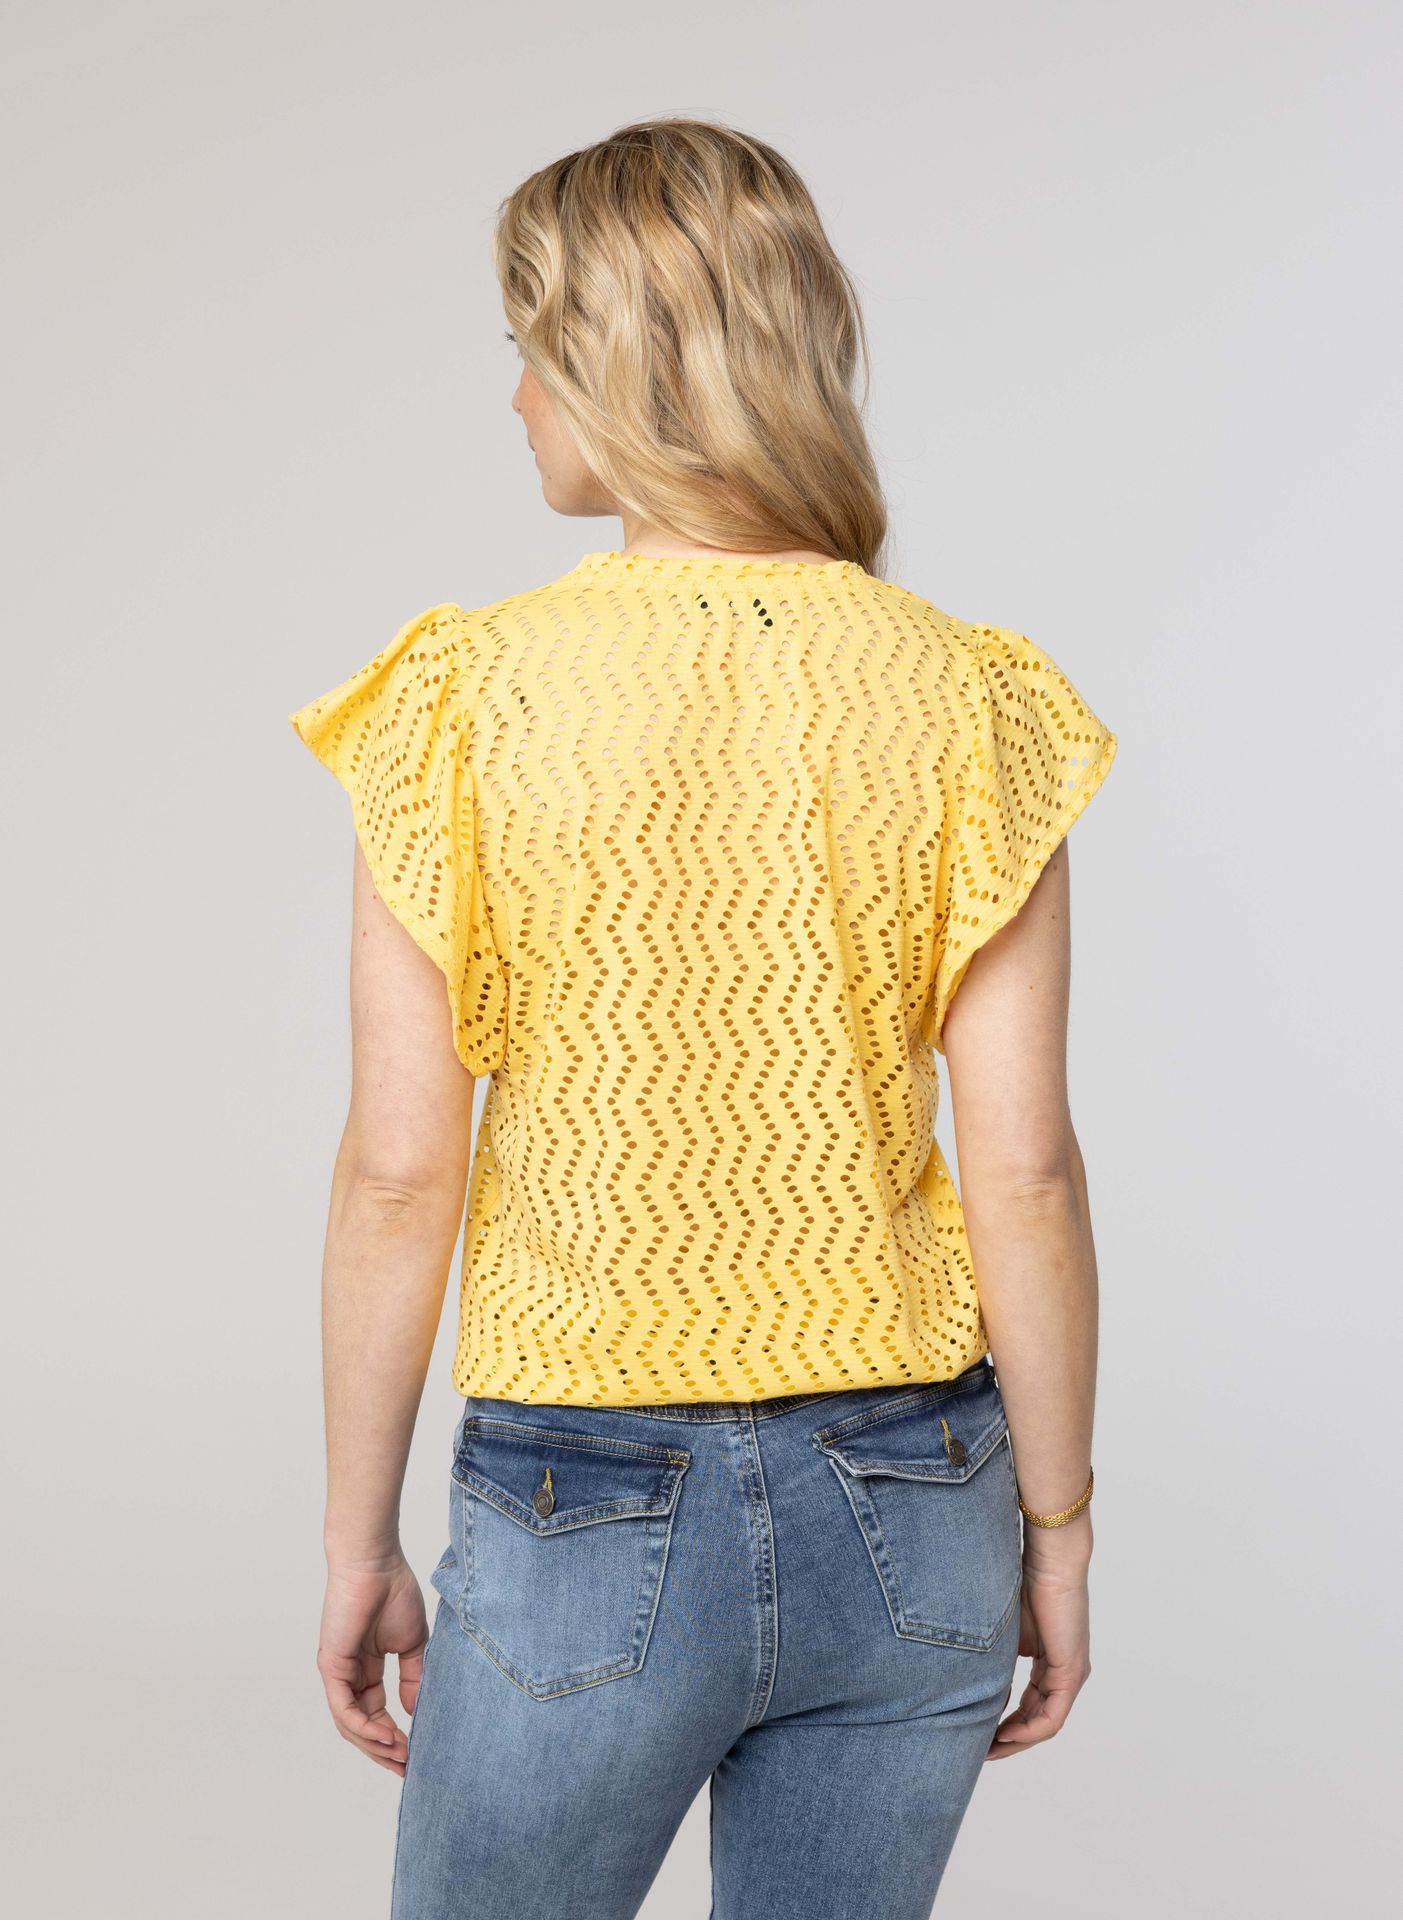 Norah Geel shirt yellow 213960-300